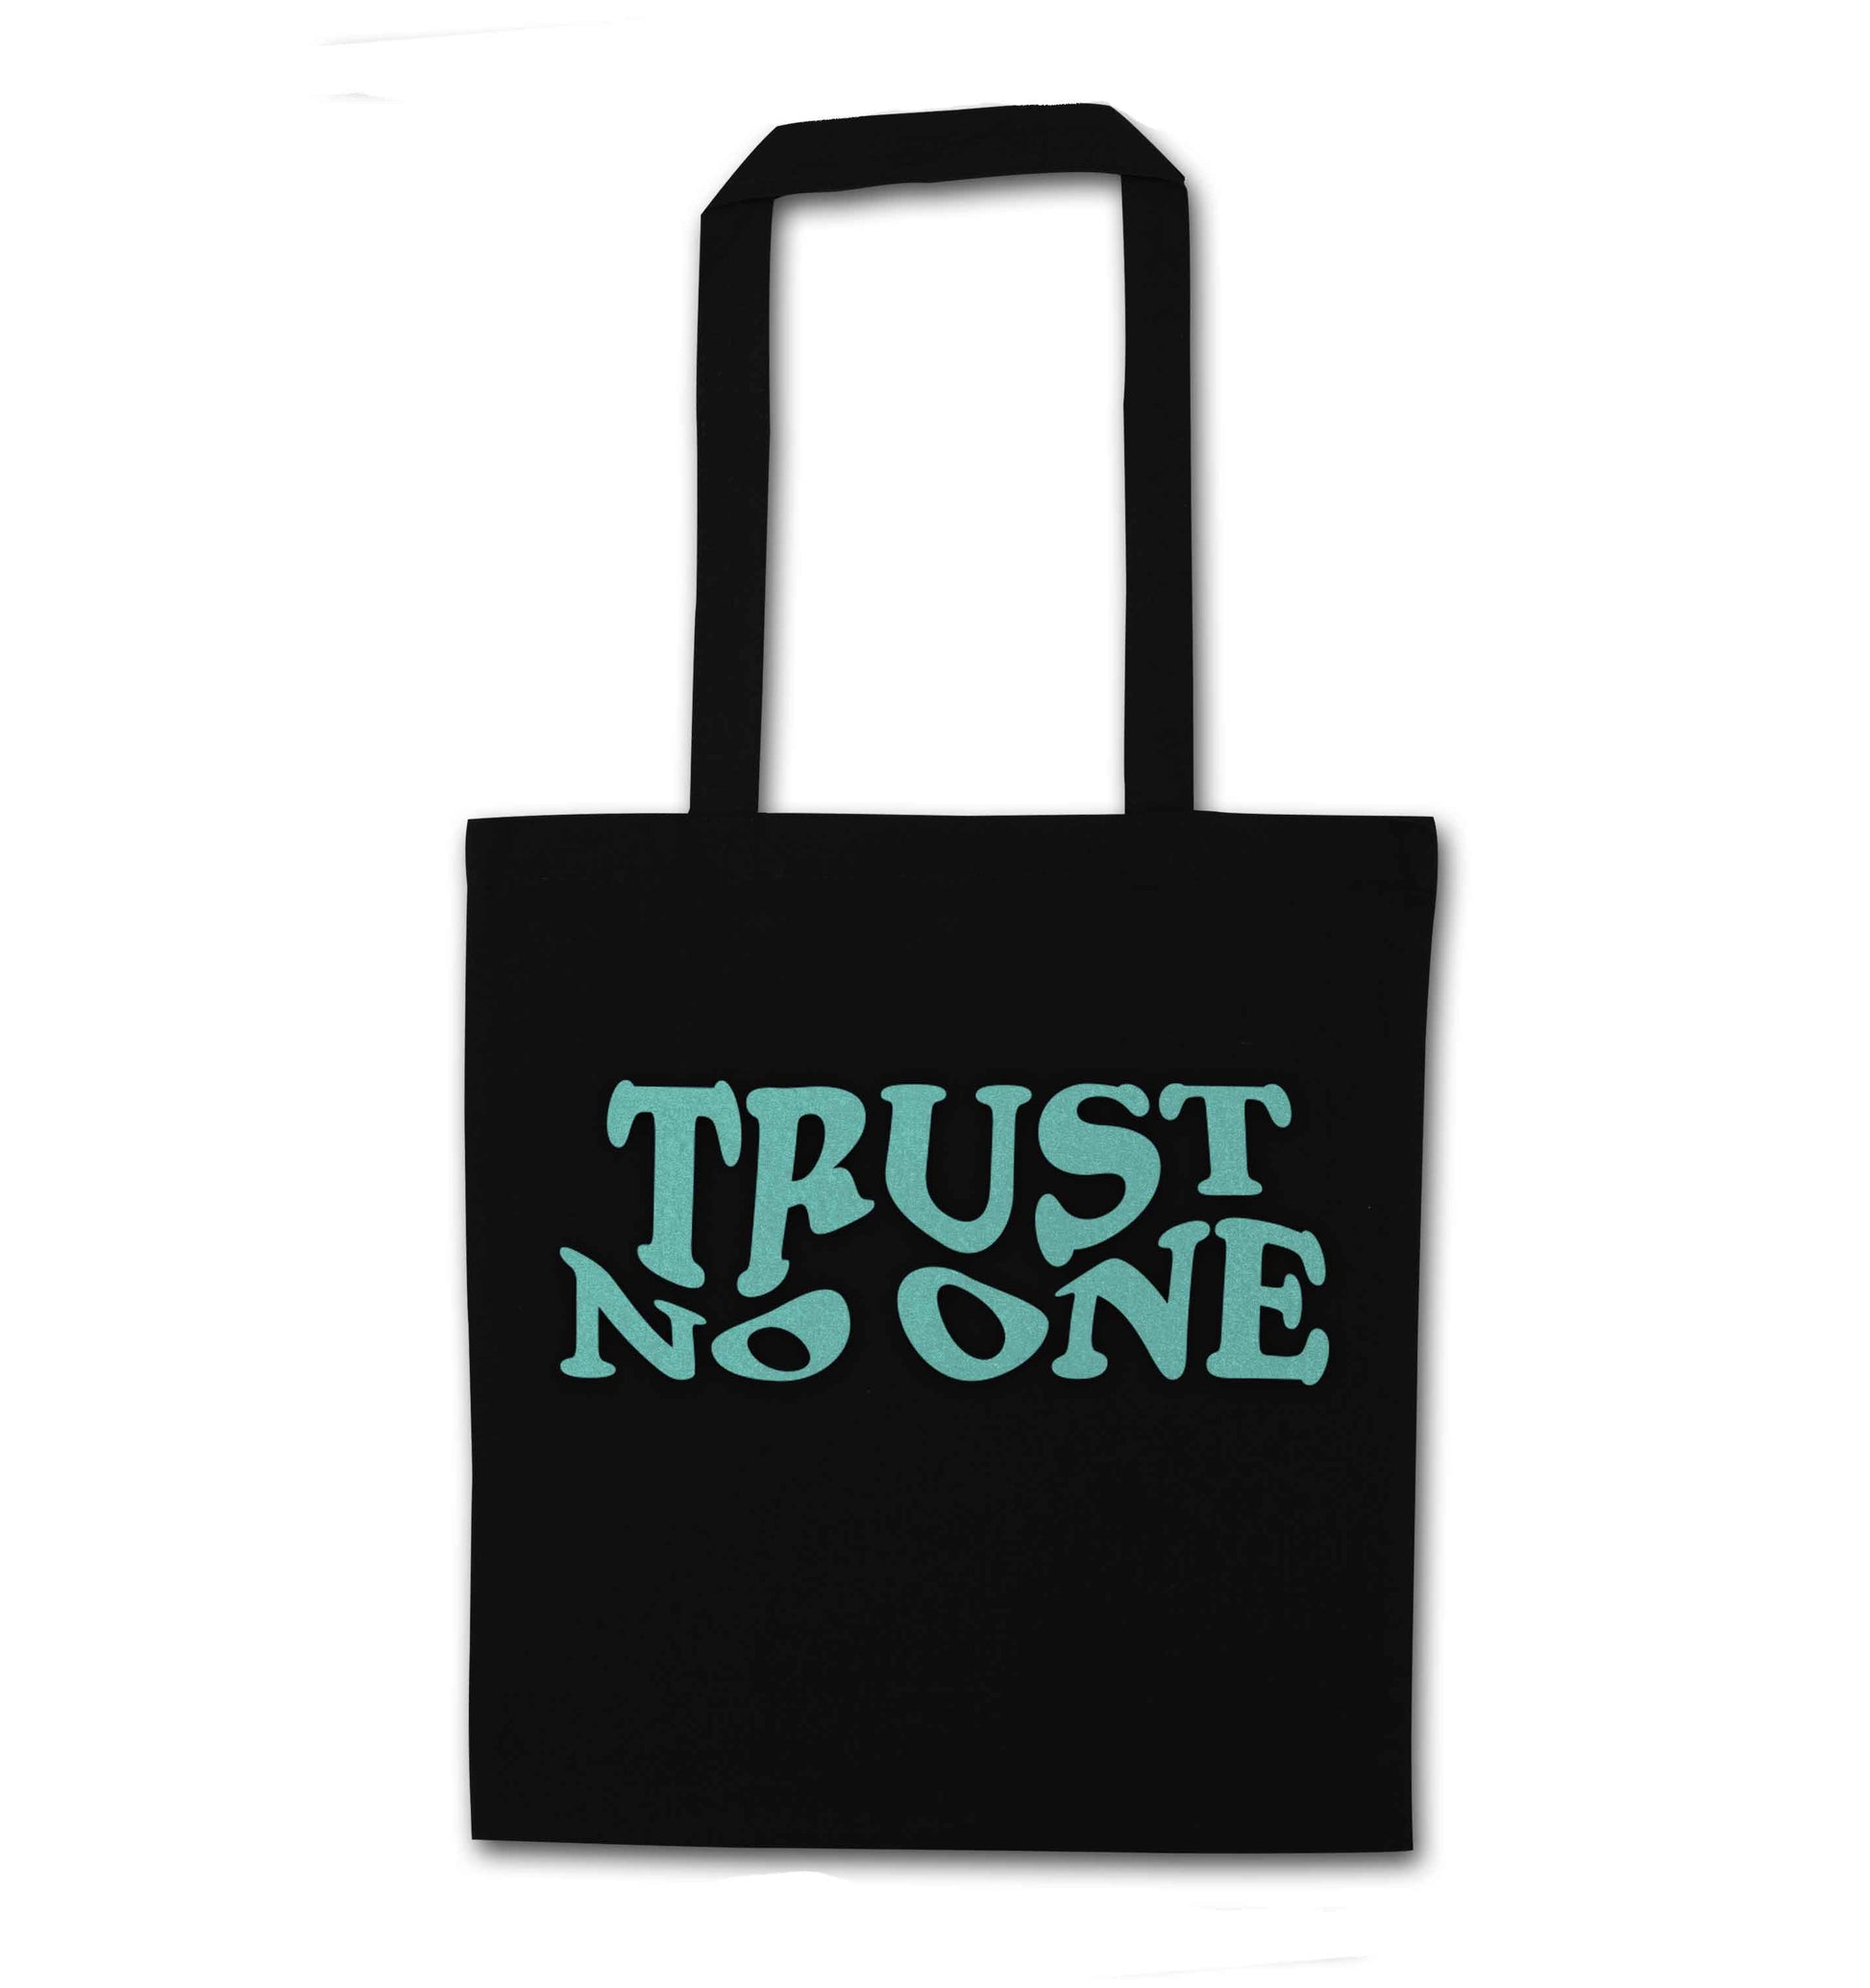 Trust no one black tote bag